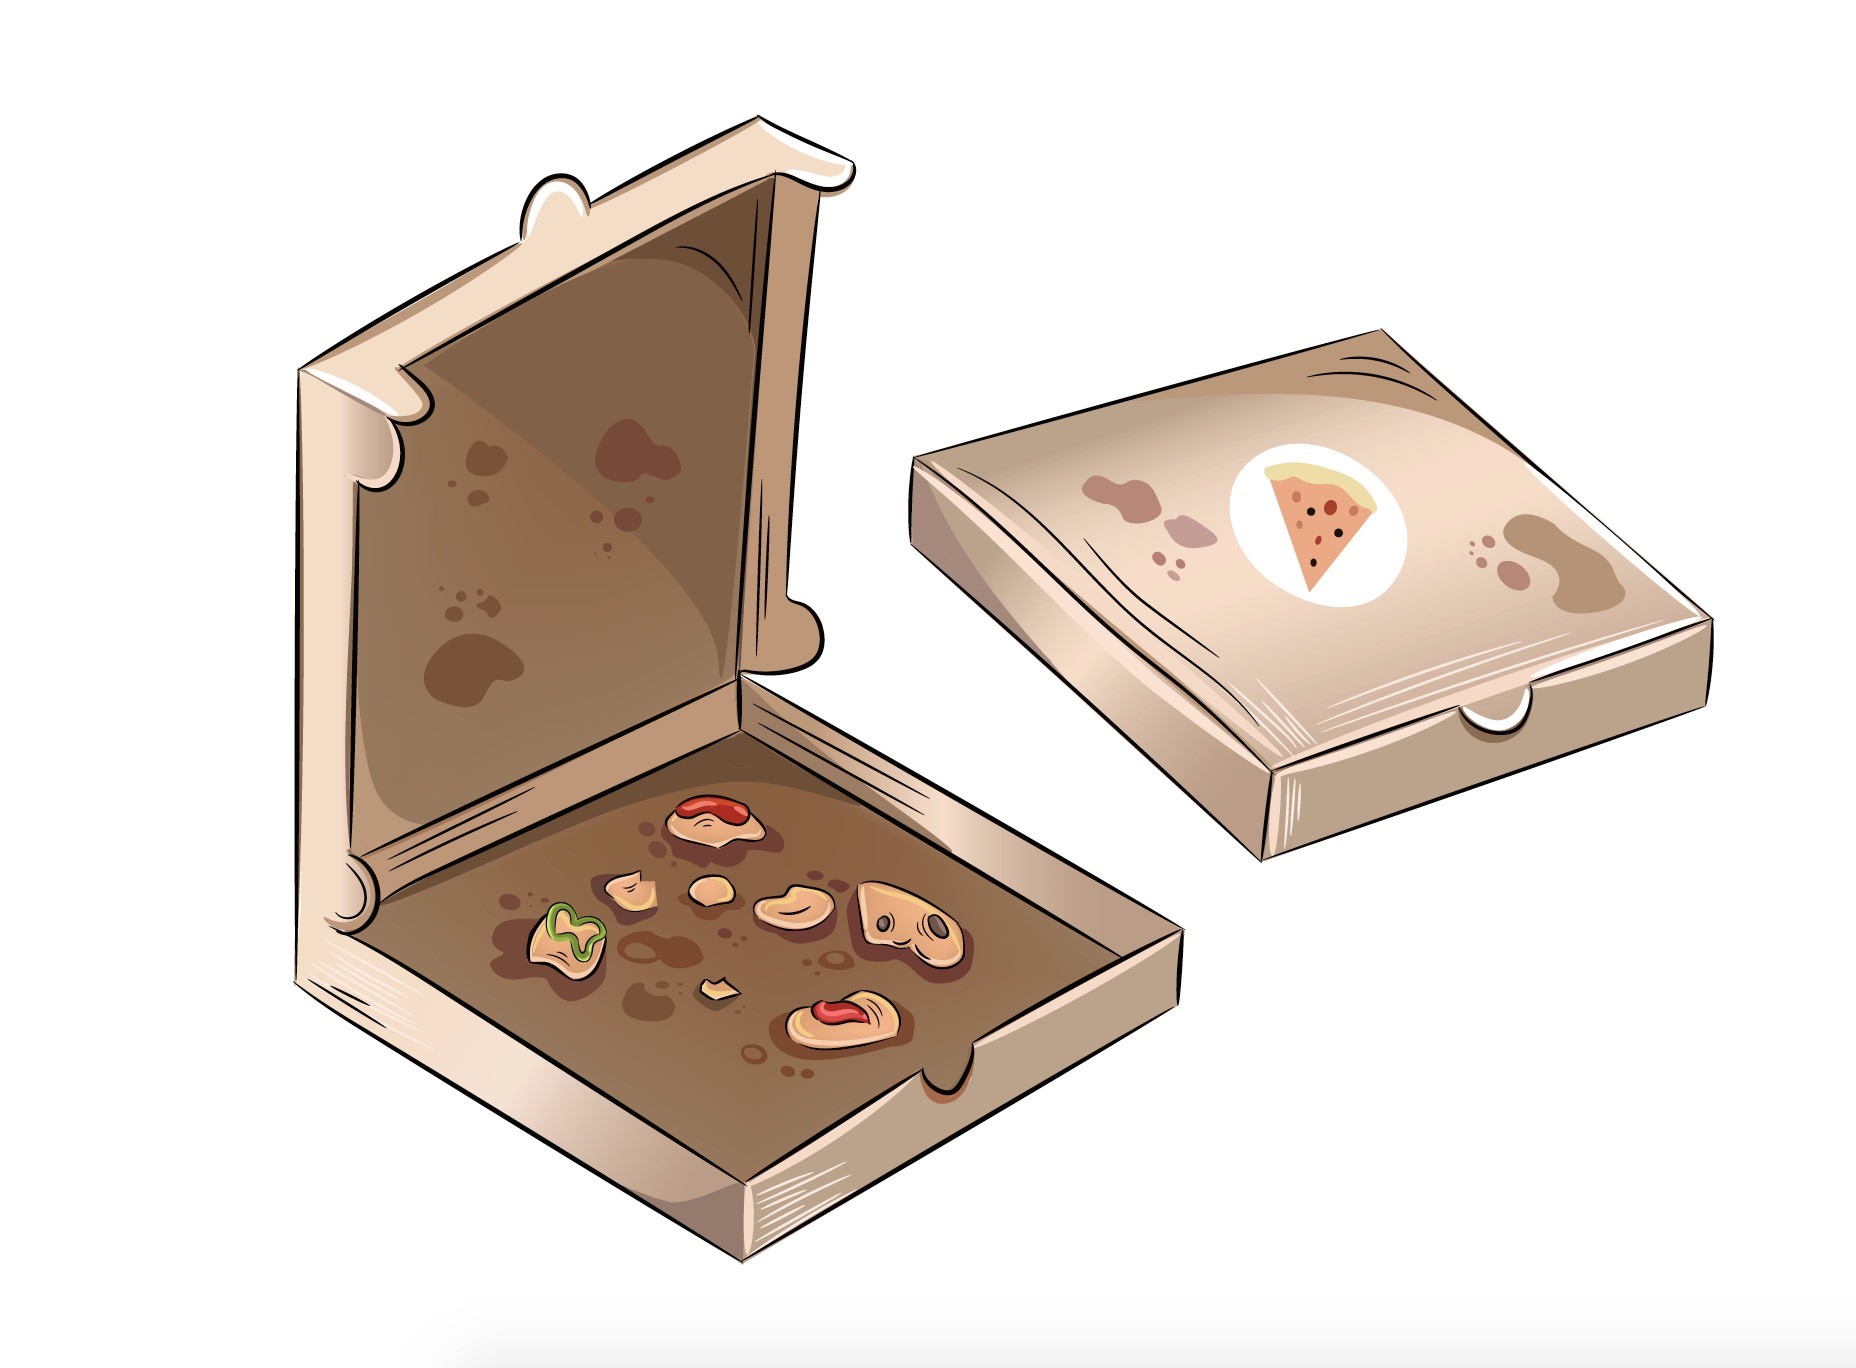 Greasy pizza box